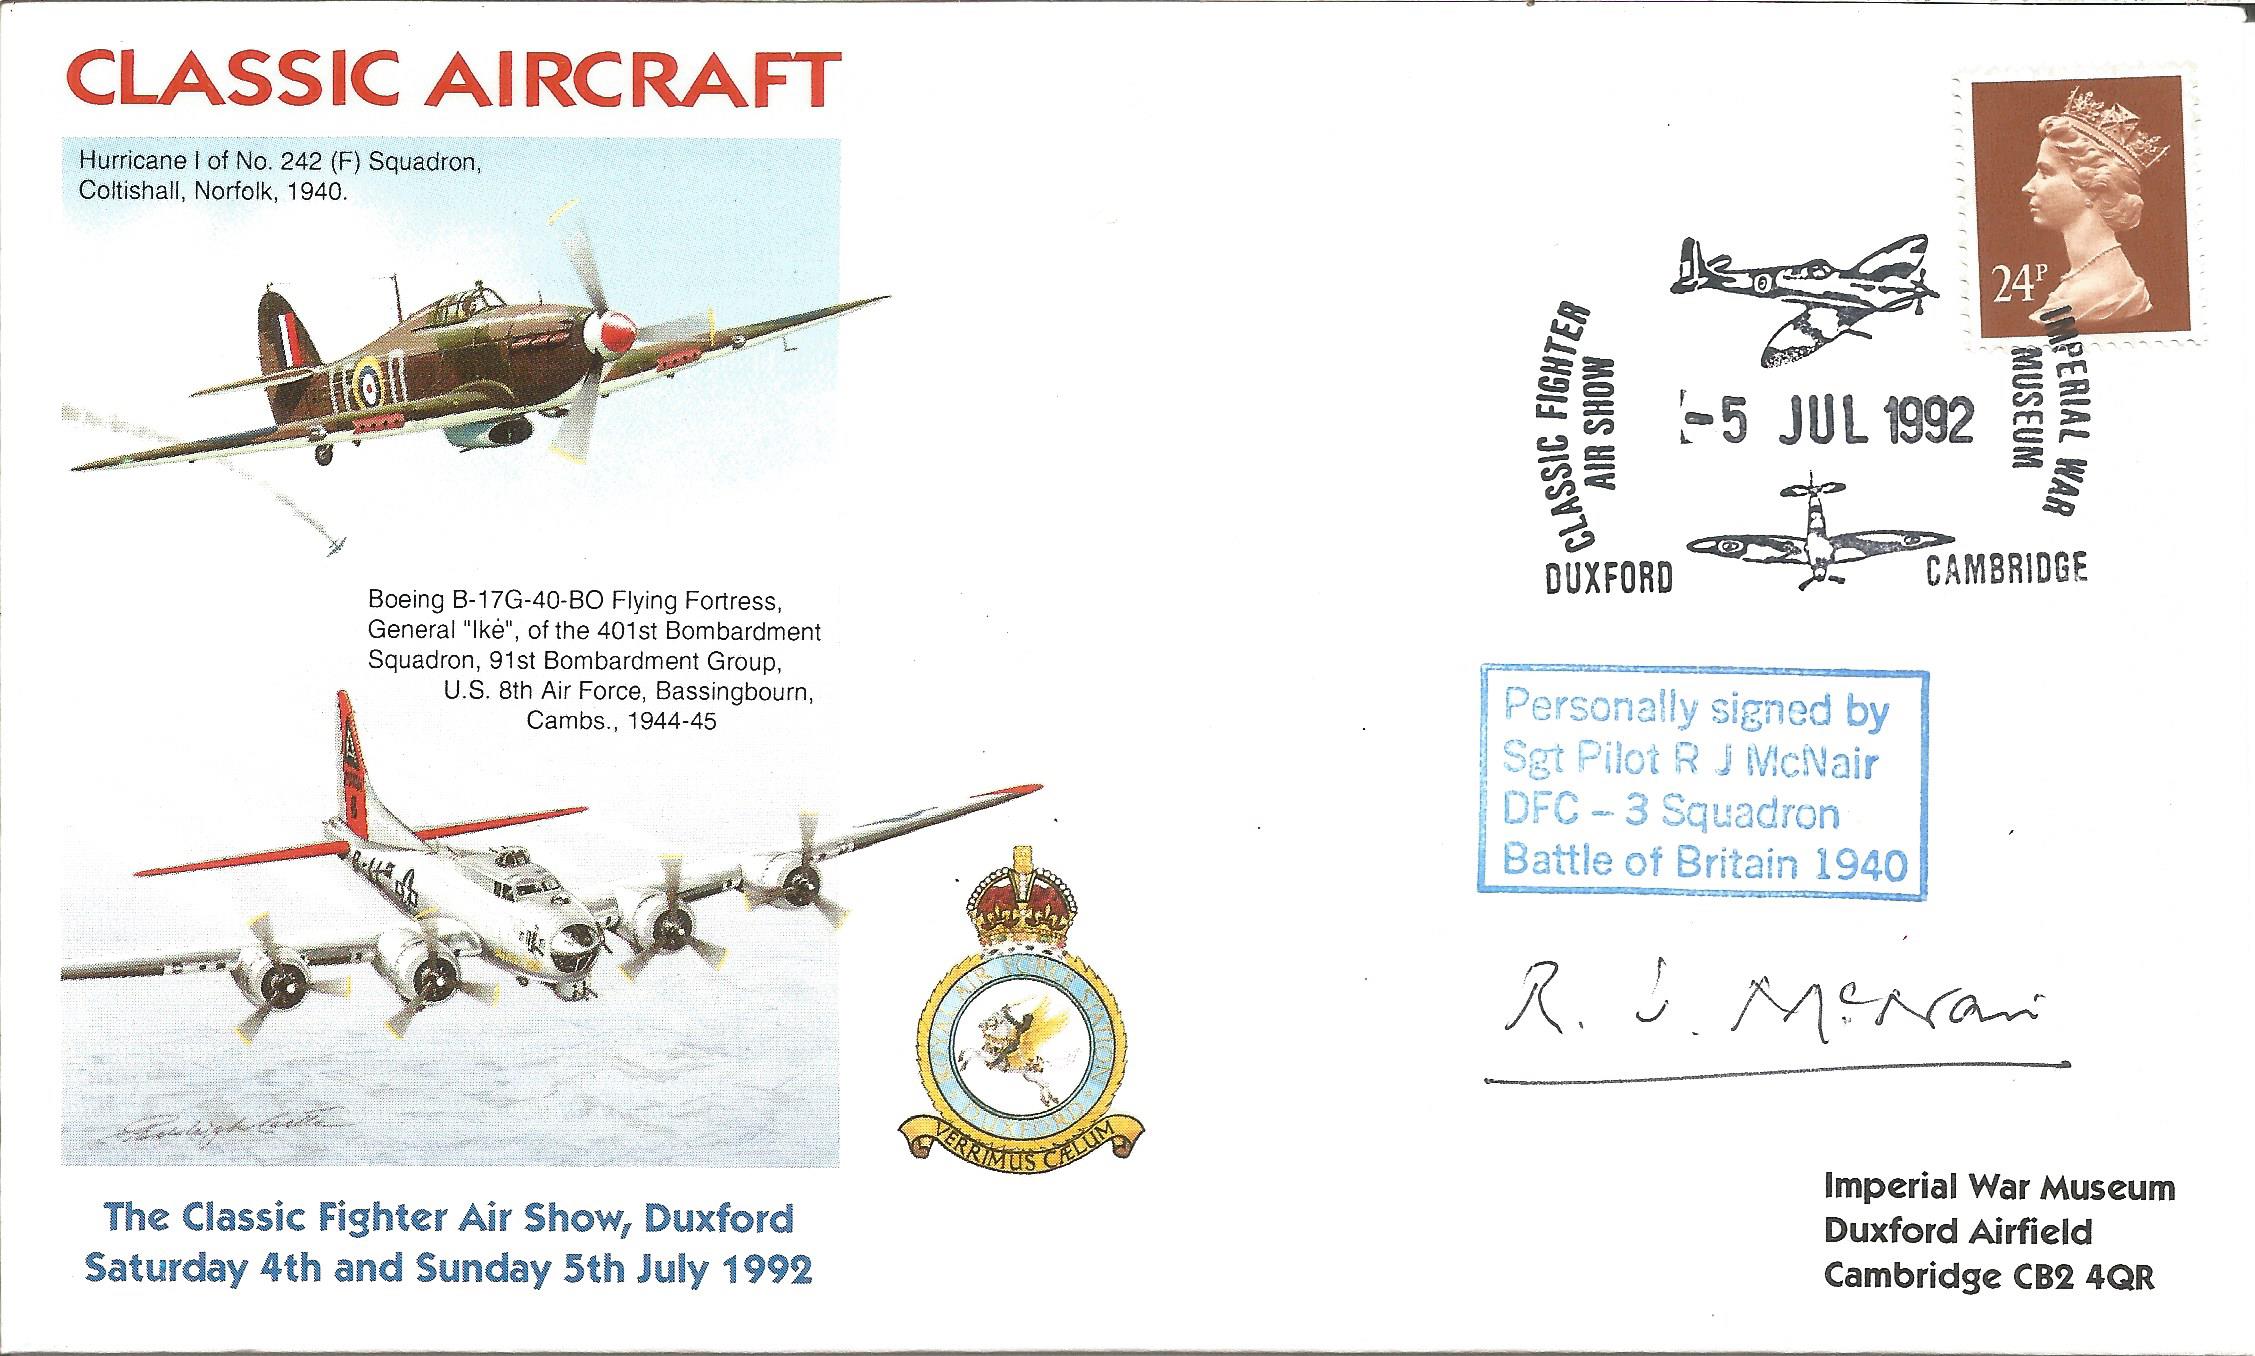 Sgt. Pilot R J McNair, DFC, 3 Squadron Battle of Britain veteran 1940, signed Classic Aircraft